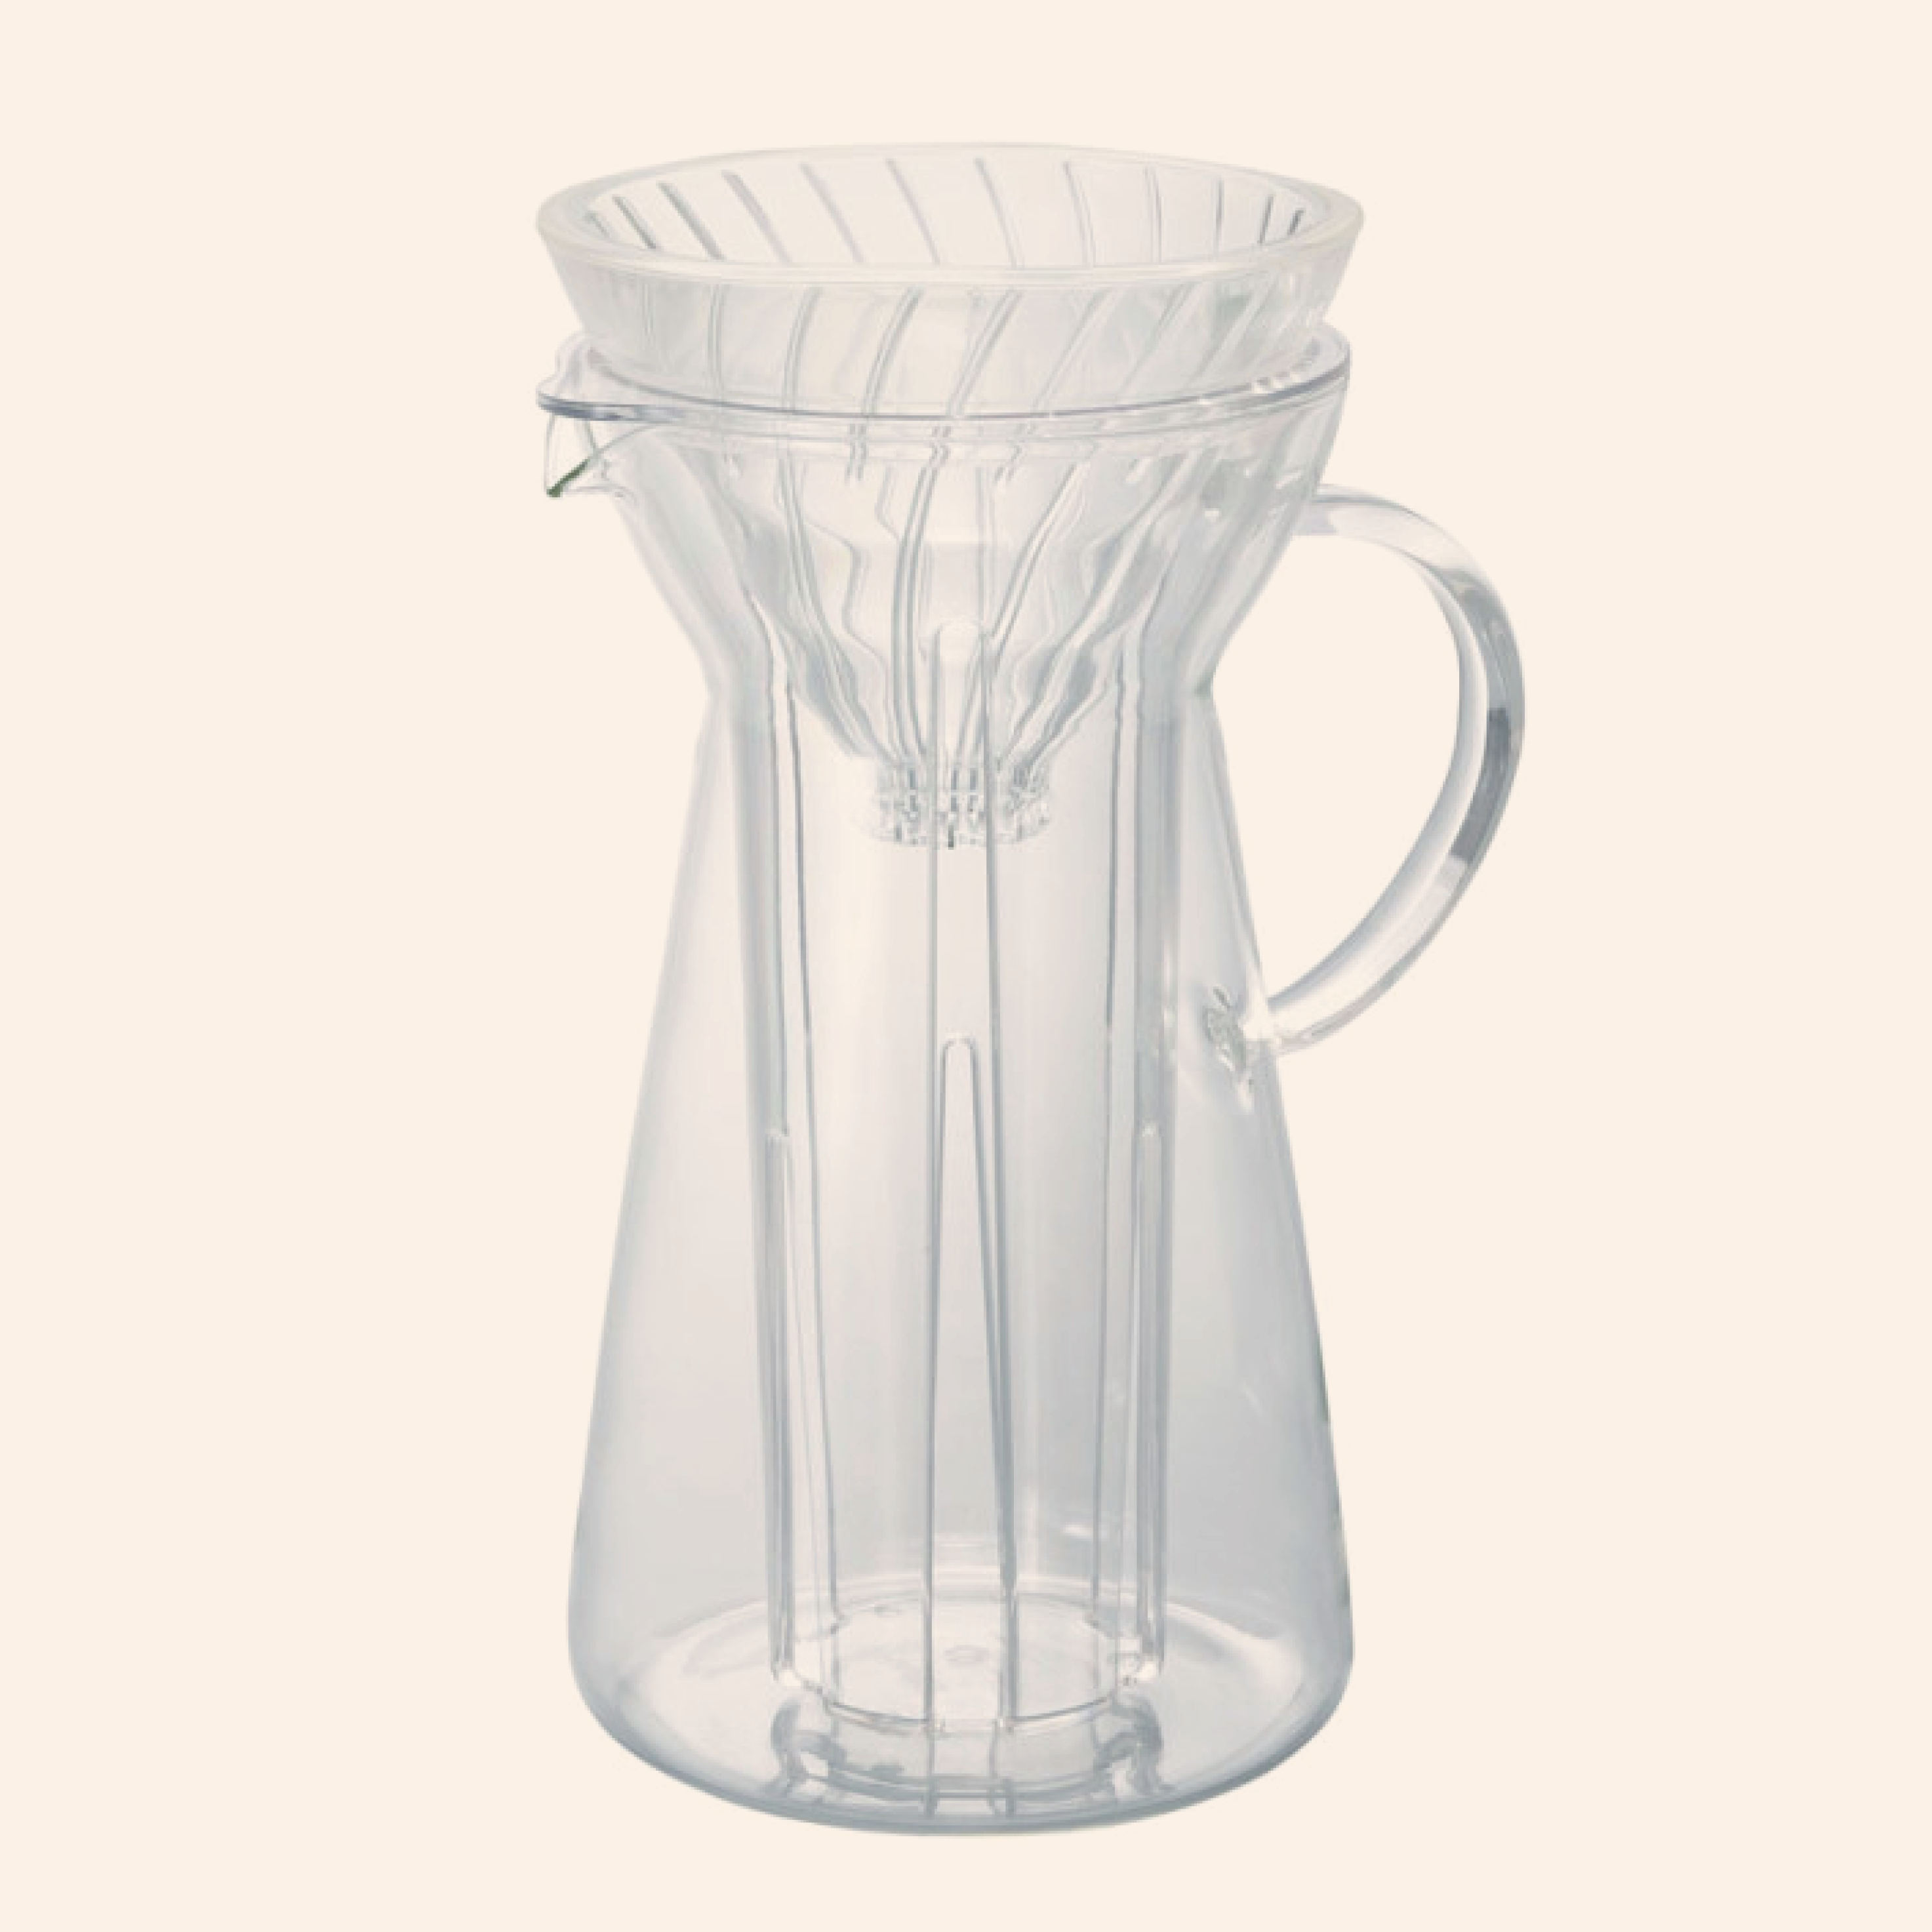 Hario V60 Glass Ice Coffee Maker